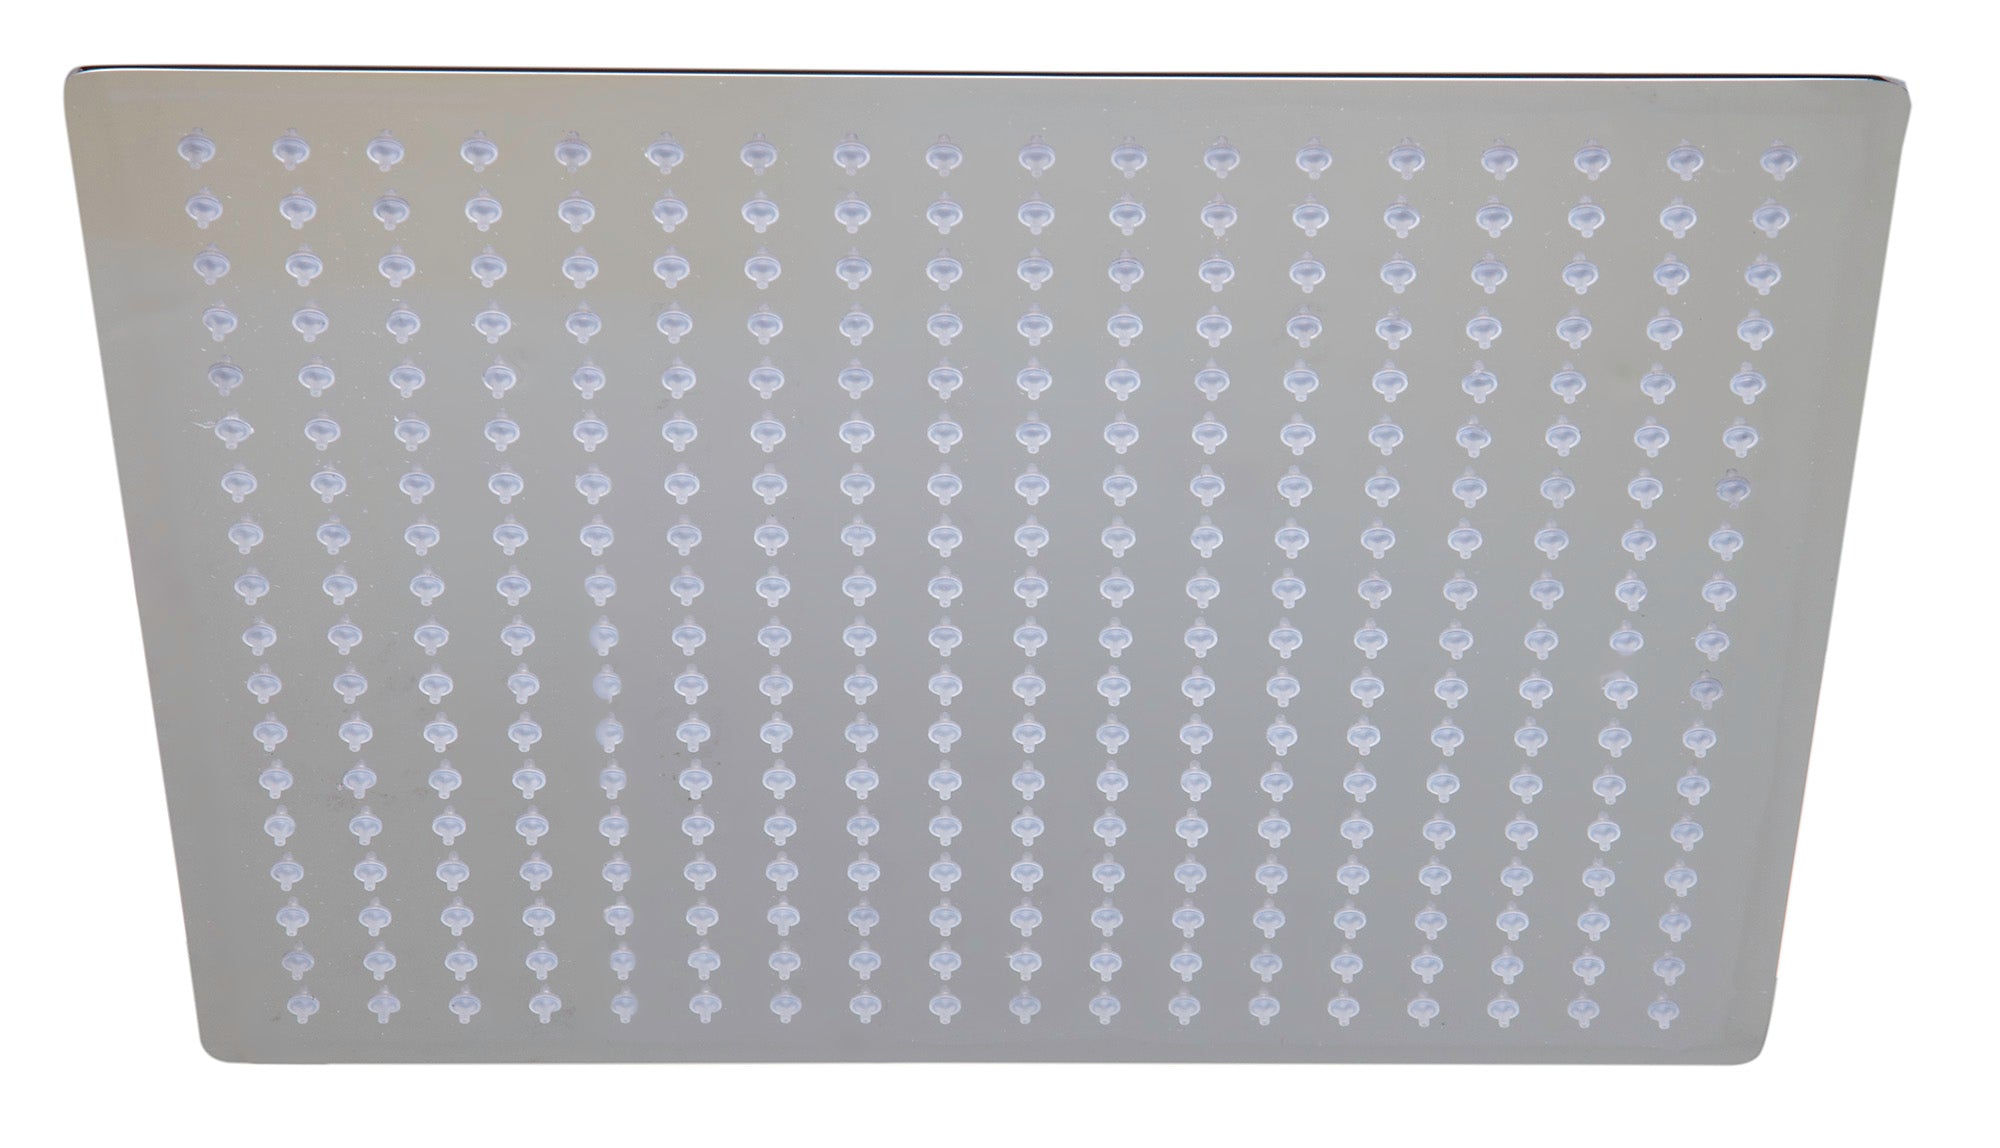 ALFI RAIN16S Rain Shower Head w/ Solid Stainless Steel (16-inch square)